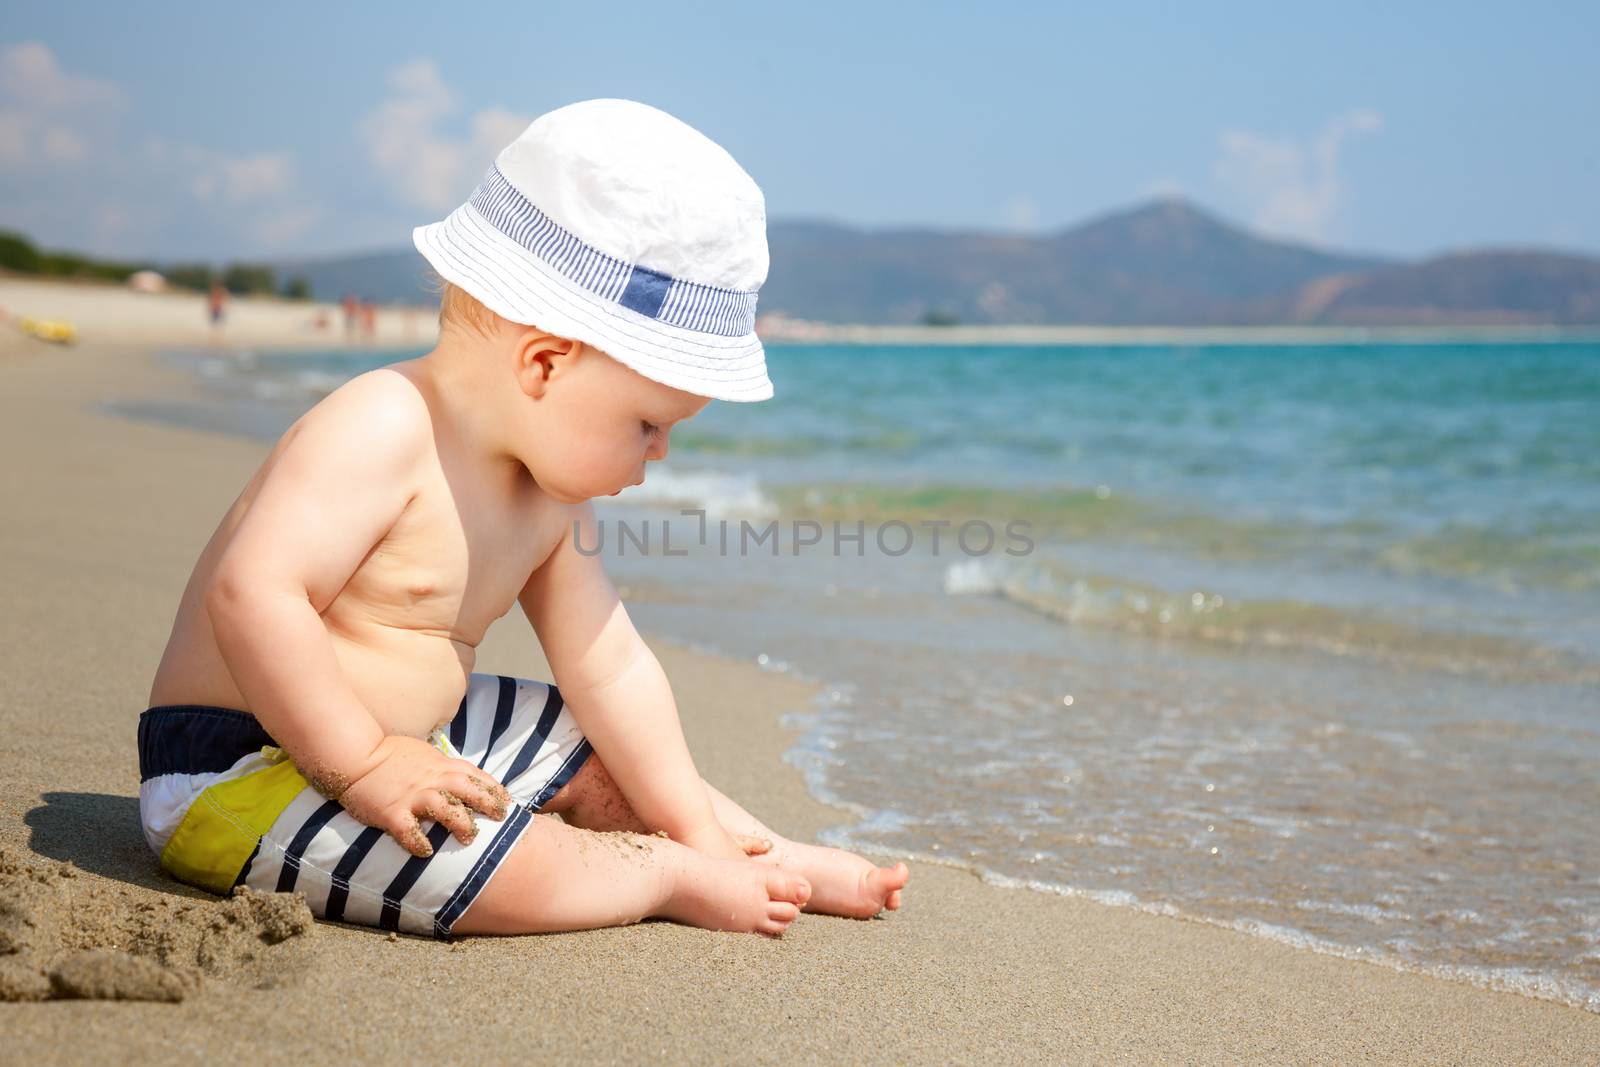 Infant on a beach by naumoid